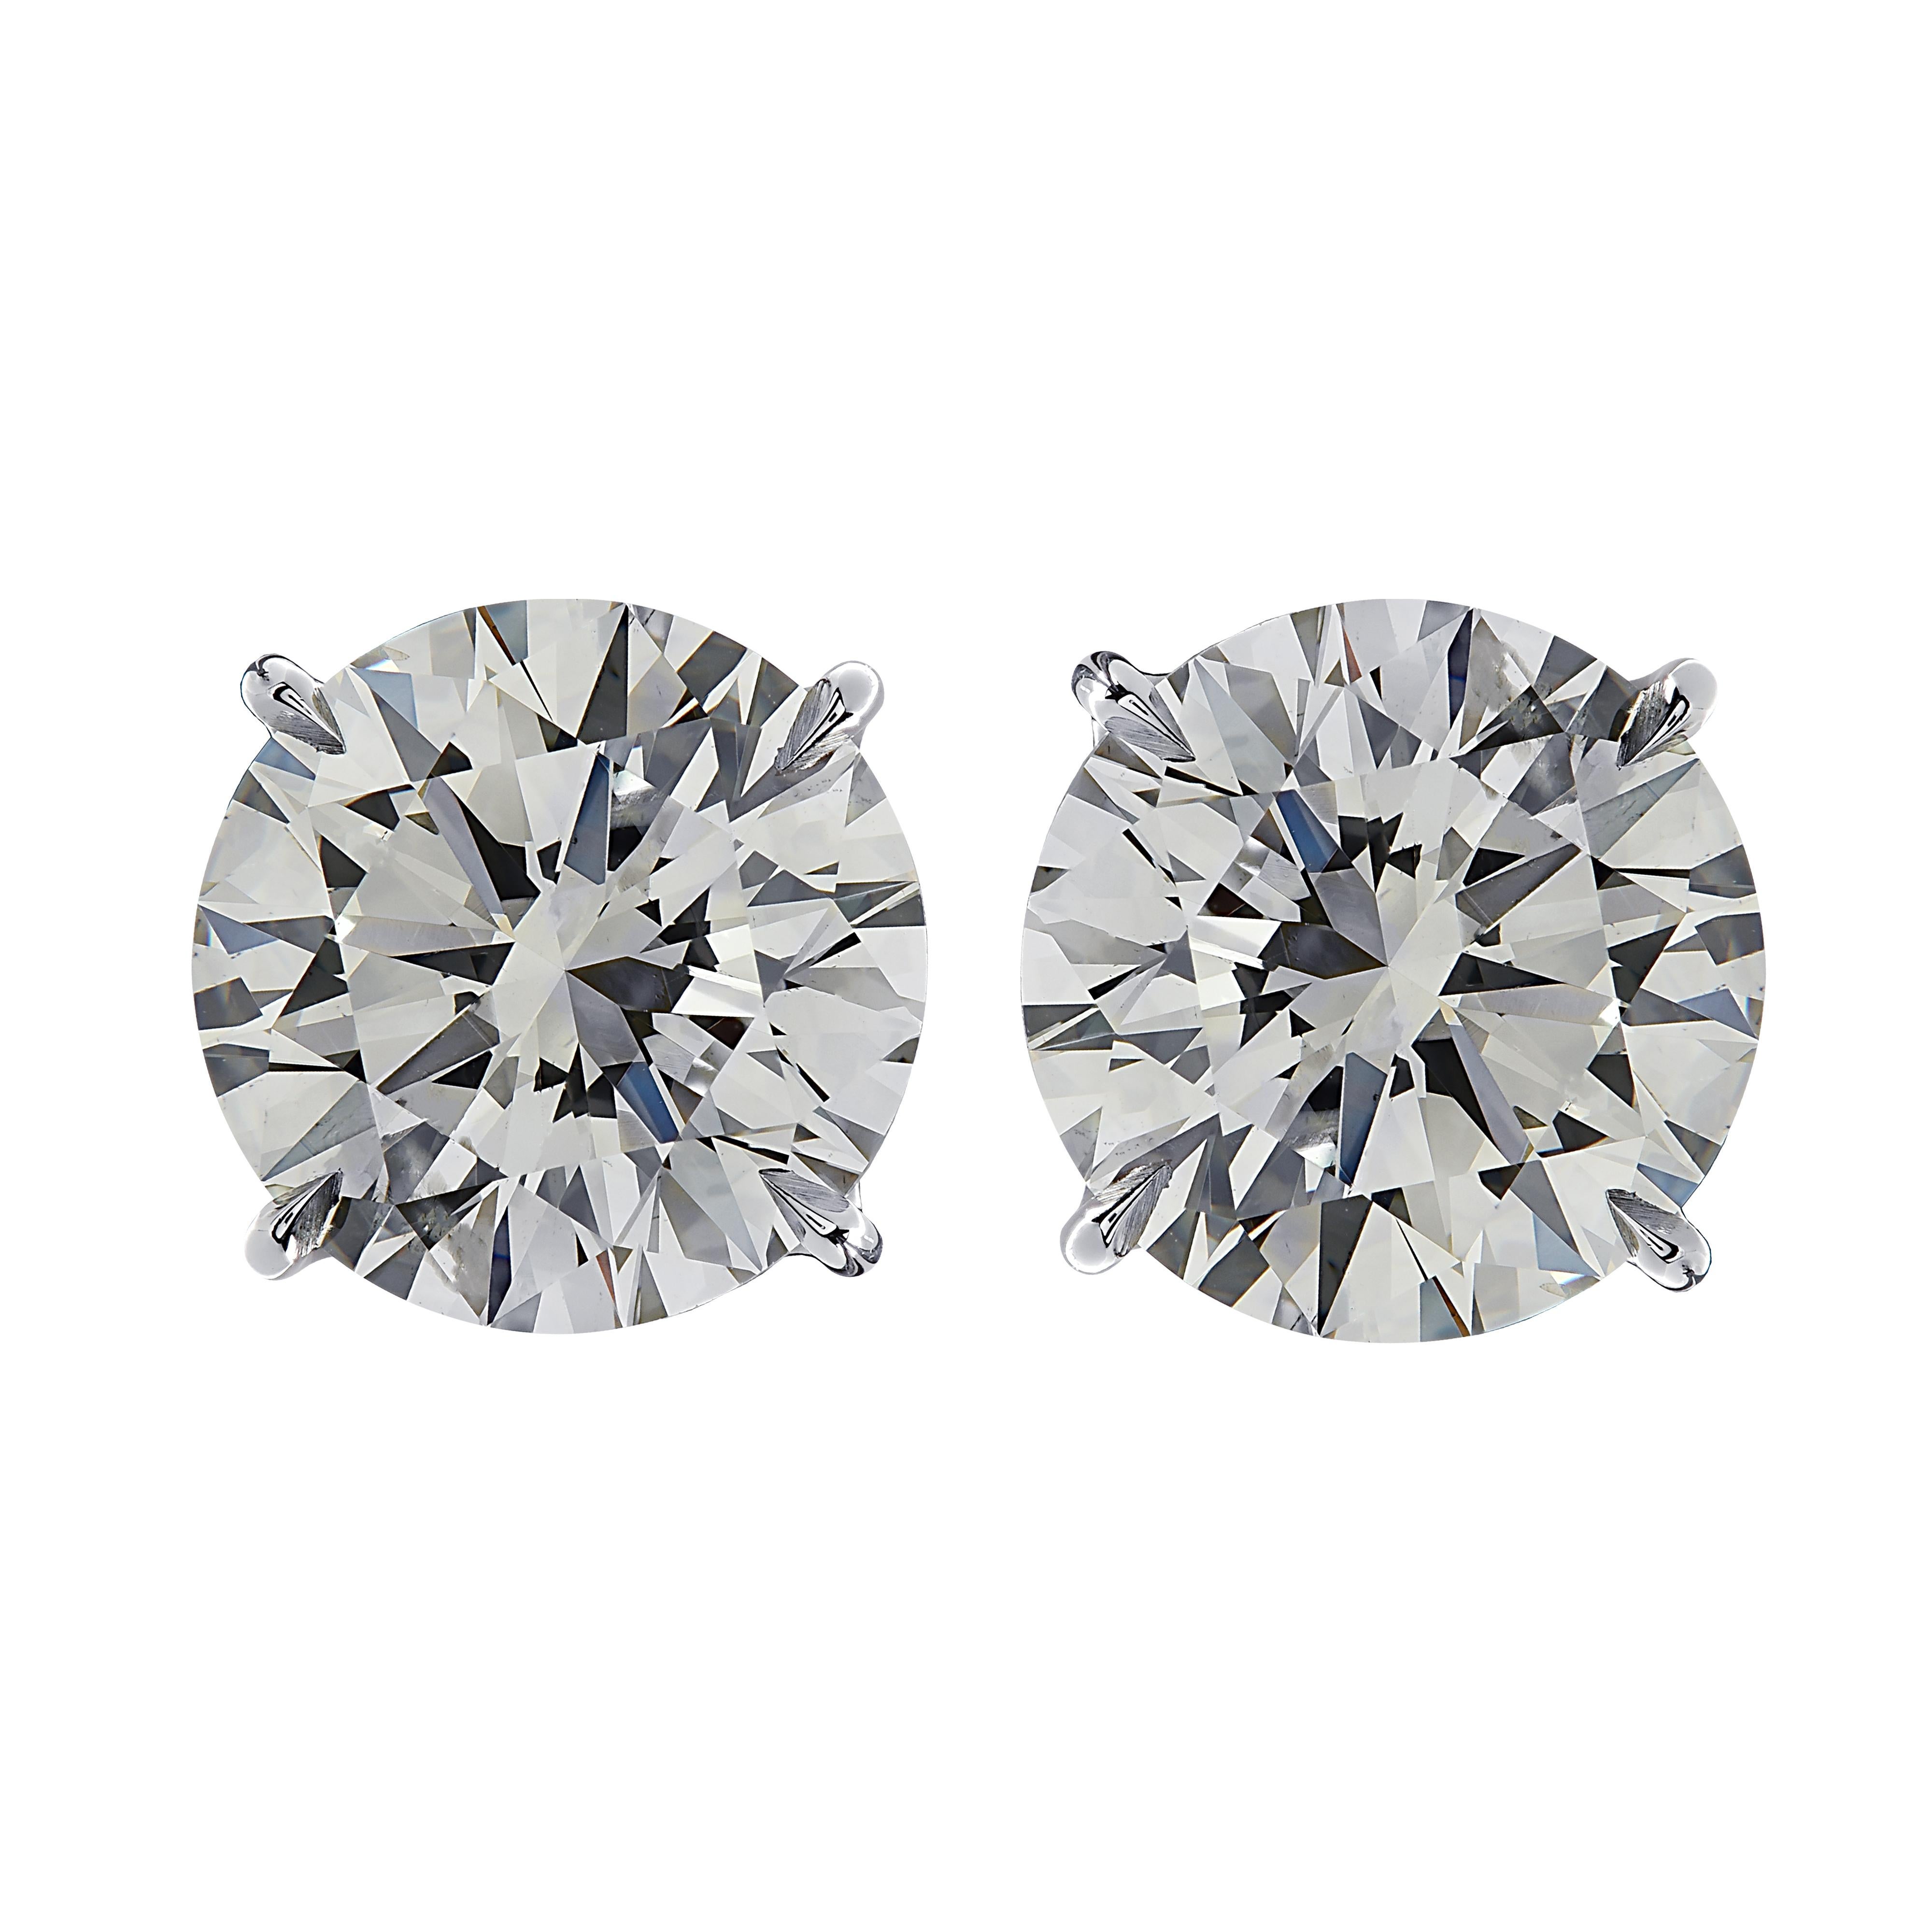 Round Cut Vivid Diamonds GIA Certified 6.14 Carat Diamond Stud Earrings For Sale